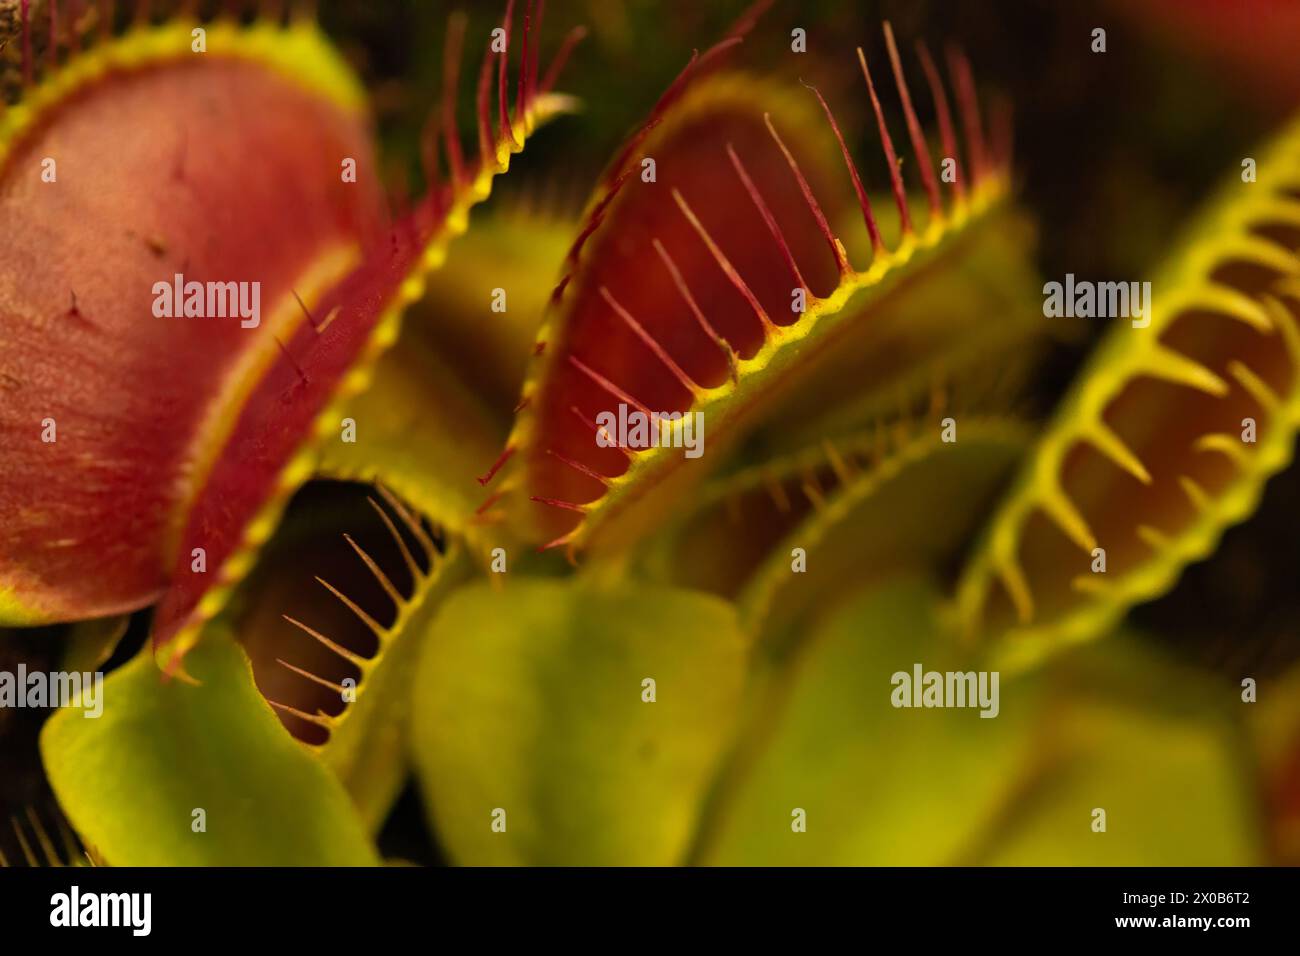 Leaves of the Venus flytrap, Dionaea muscipula, subtropical carnivorous plant close up Stock Photo